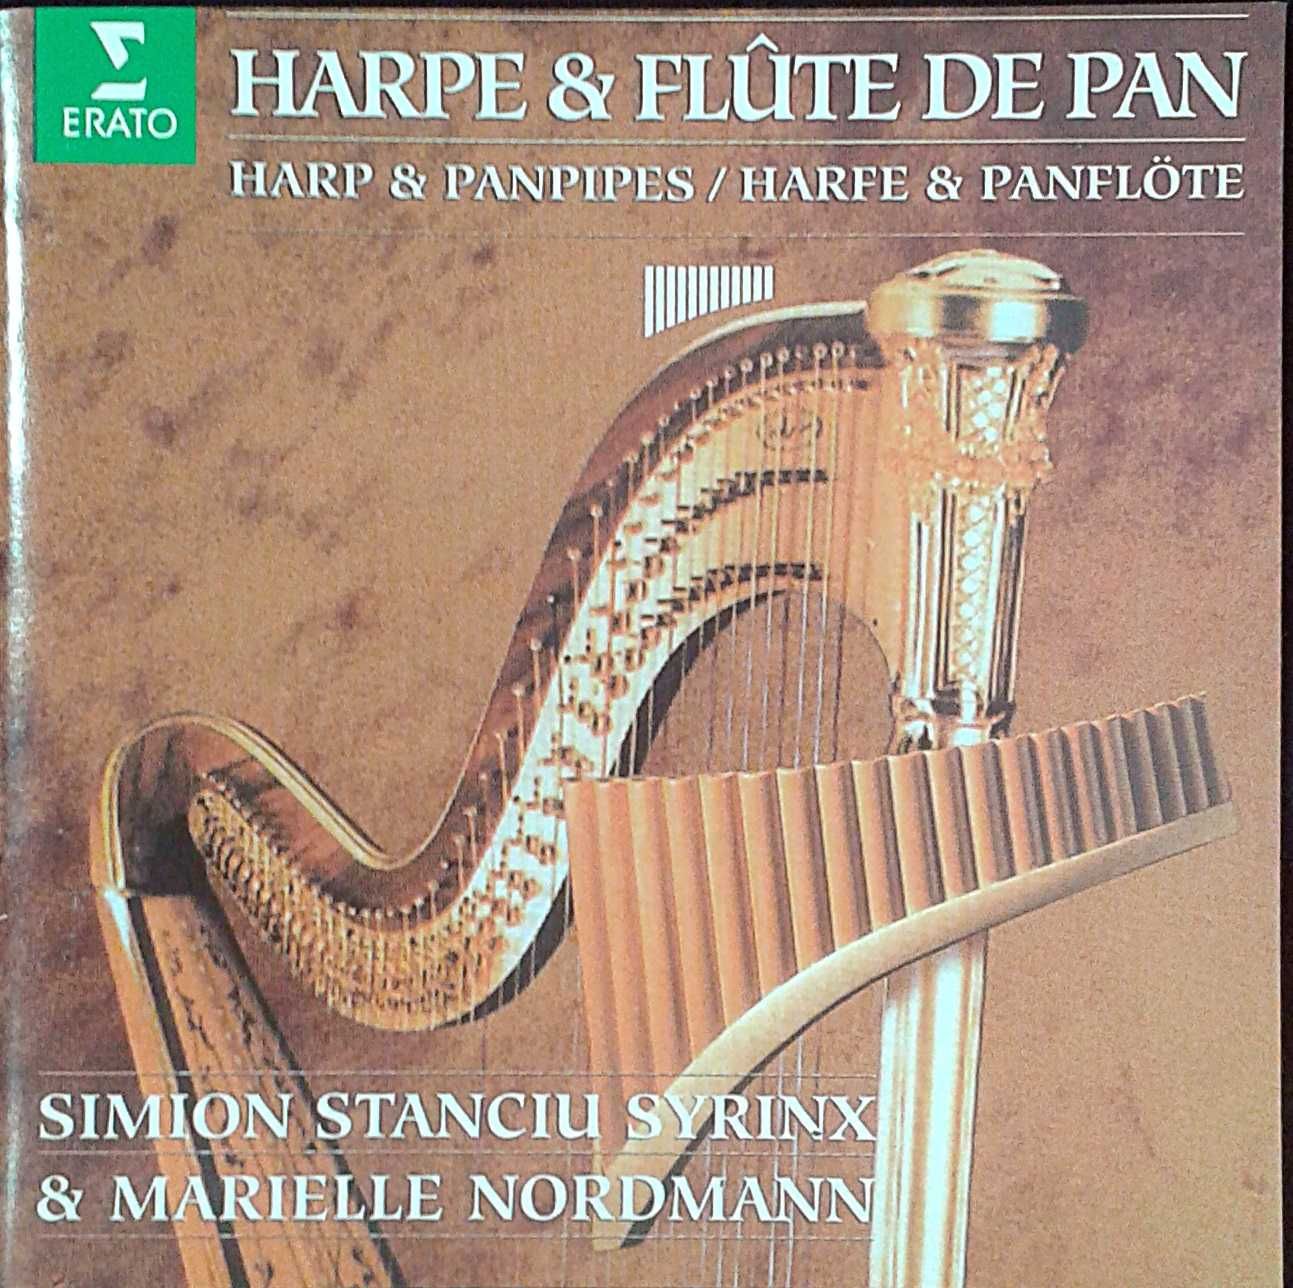 Harpa e Flauta de Pan.Syrinx & Nordmann.Pub ERATO Envio CTT